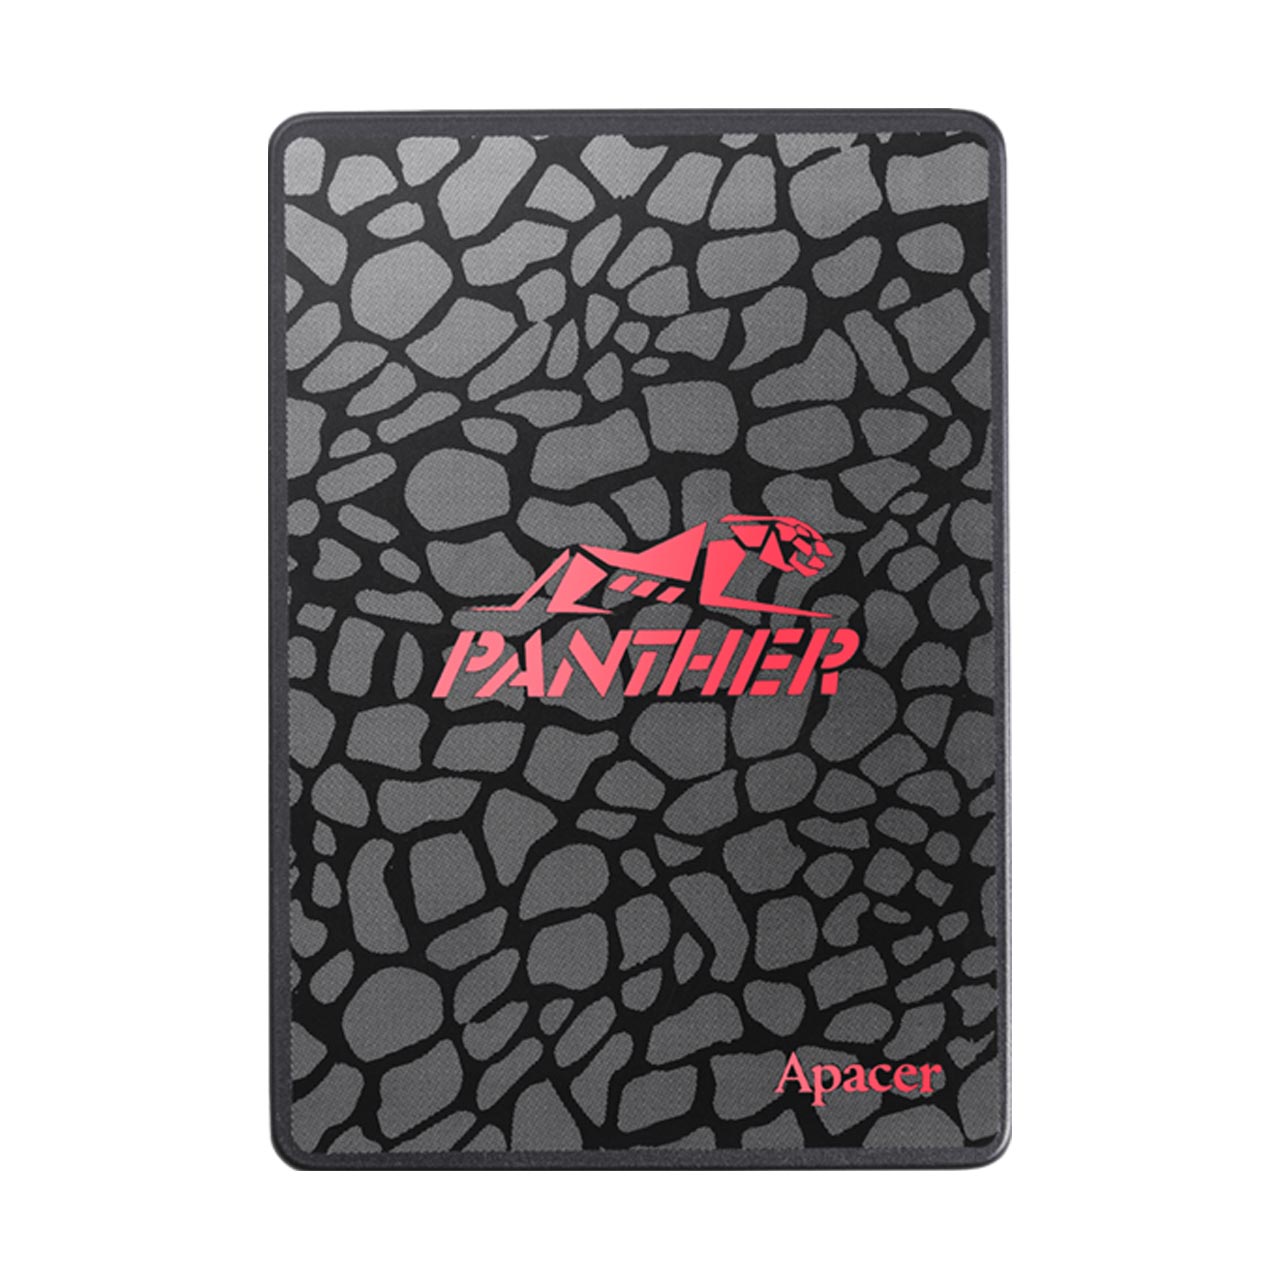 حافظه SSD برند Apacer مدل AS350 ظرفیت 120GB 

Apacer AS350 120GB Panther SATA III SSD